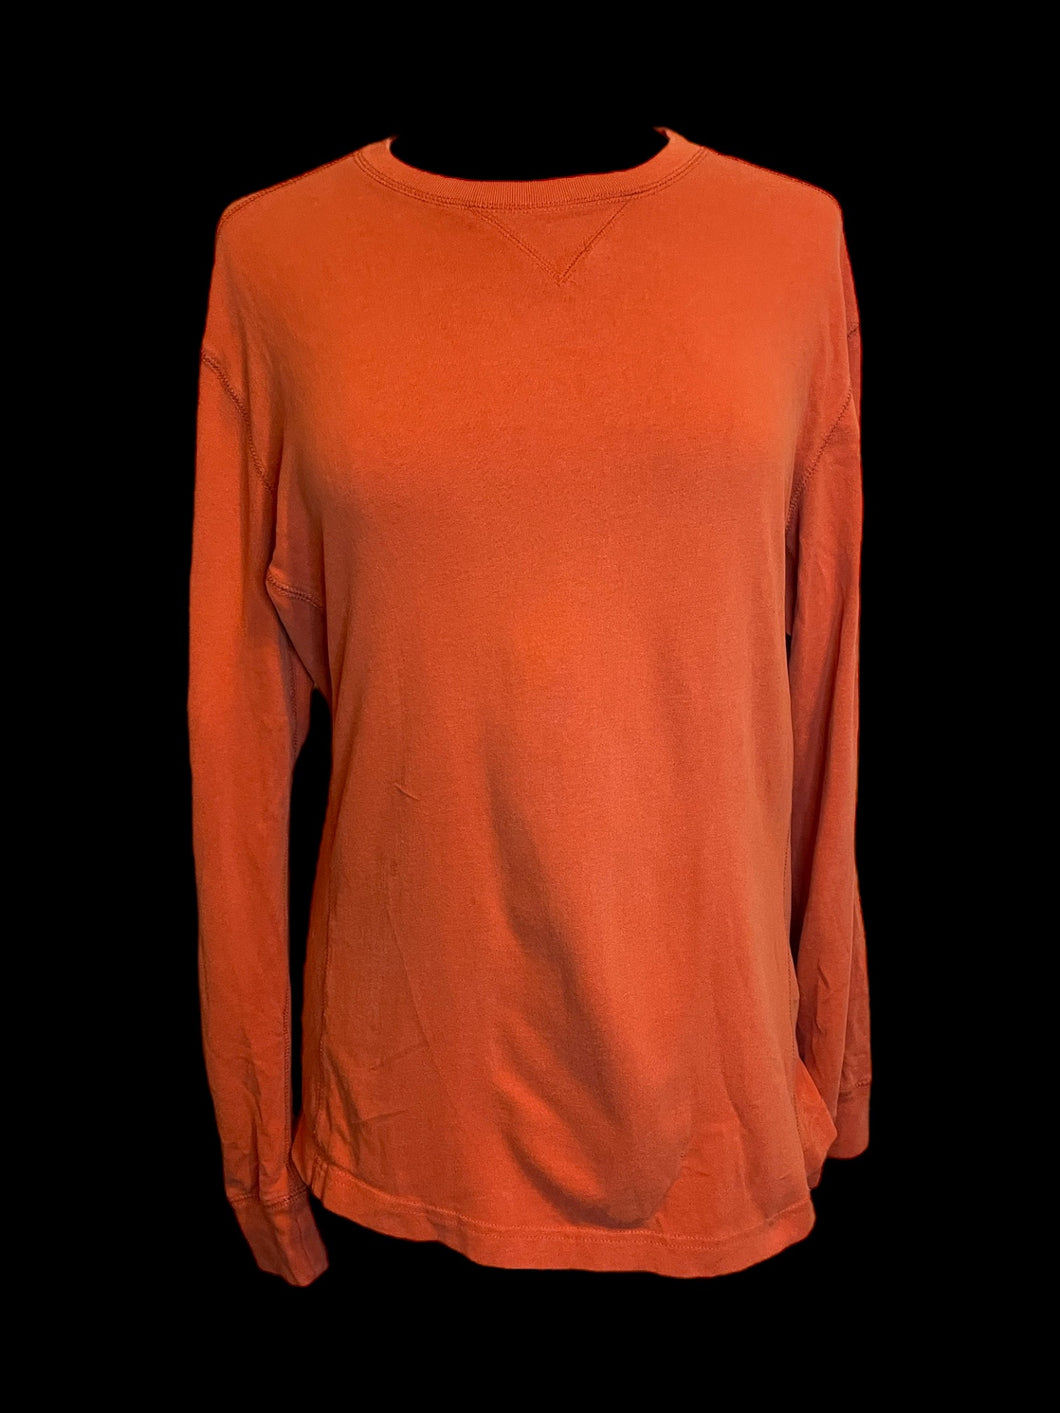 0X Orange crewneck sweater w/ ribbed hems, & visible stitching